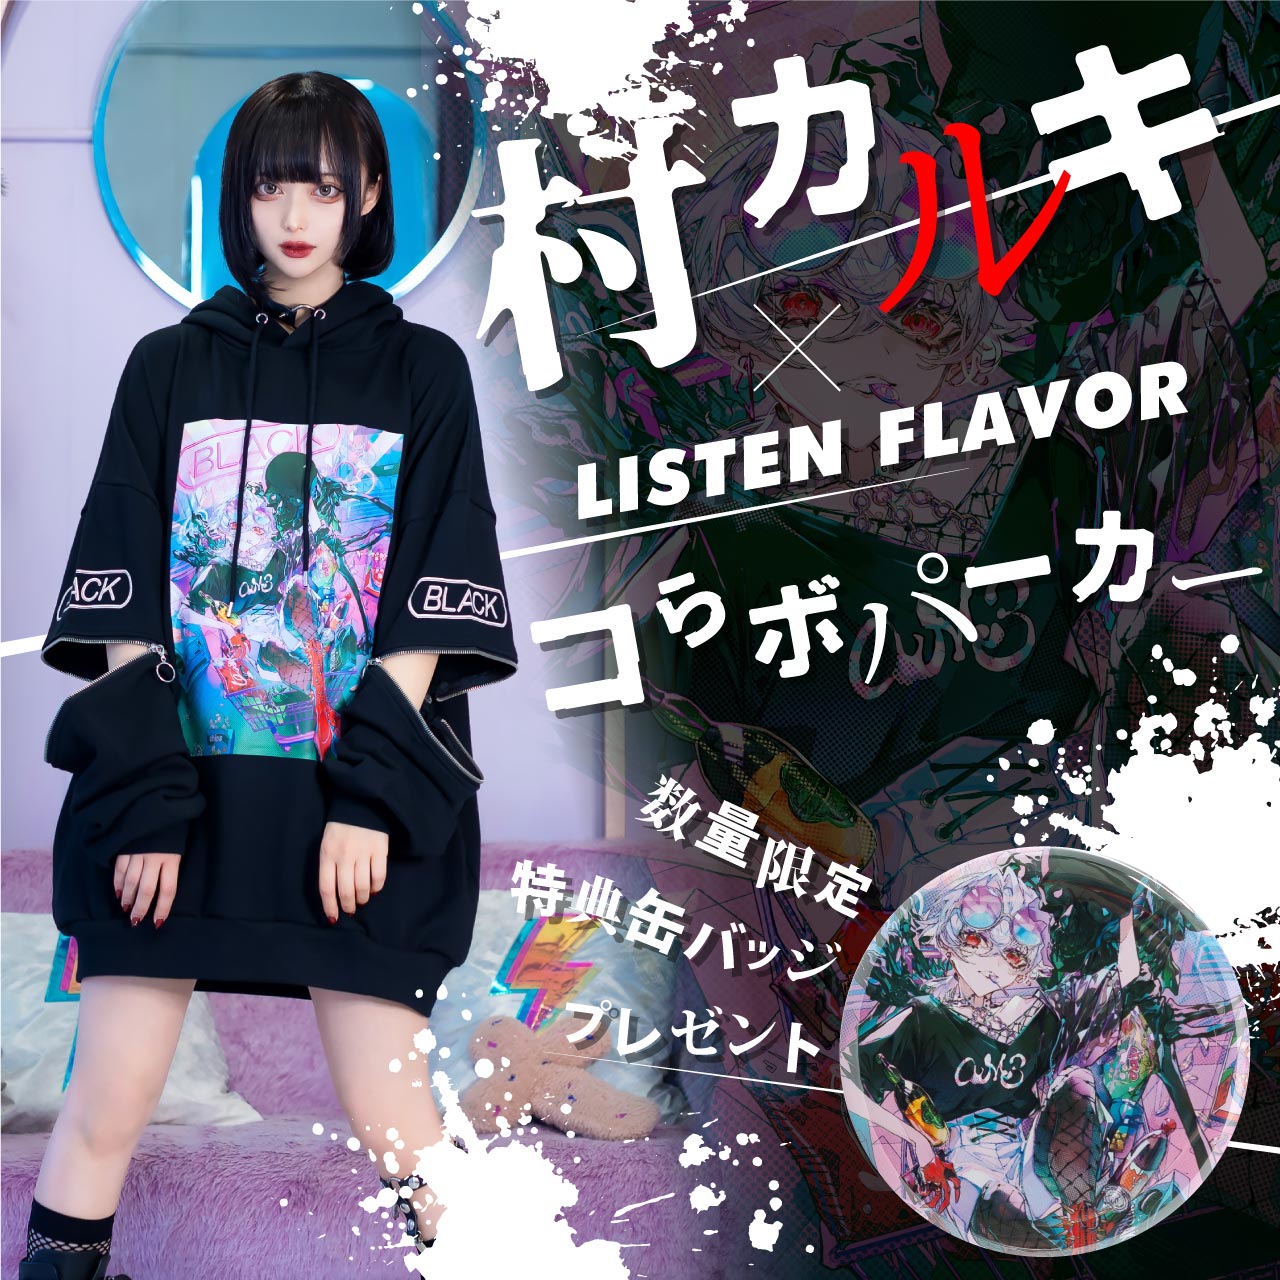 listen flavor 初音ミク ジャージパーカー リッスンフレーバー-